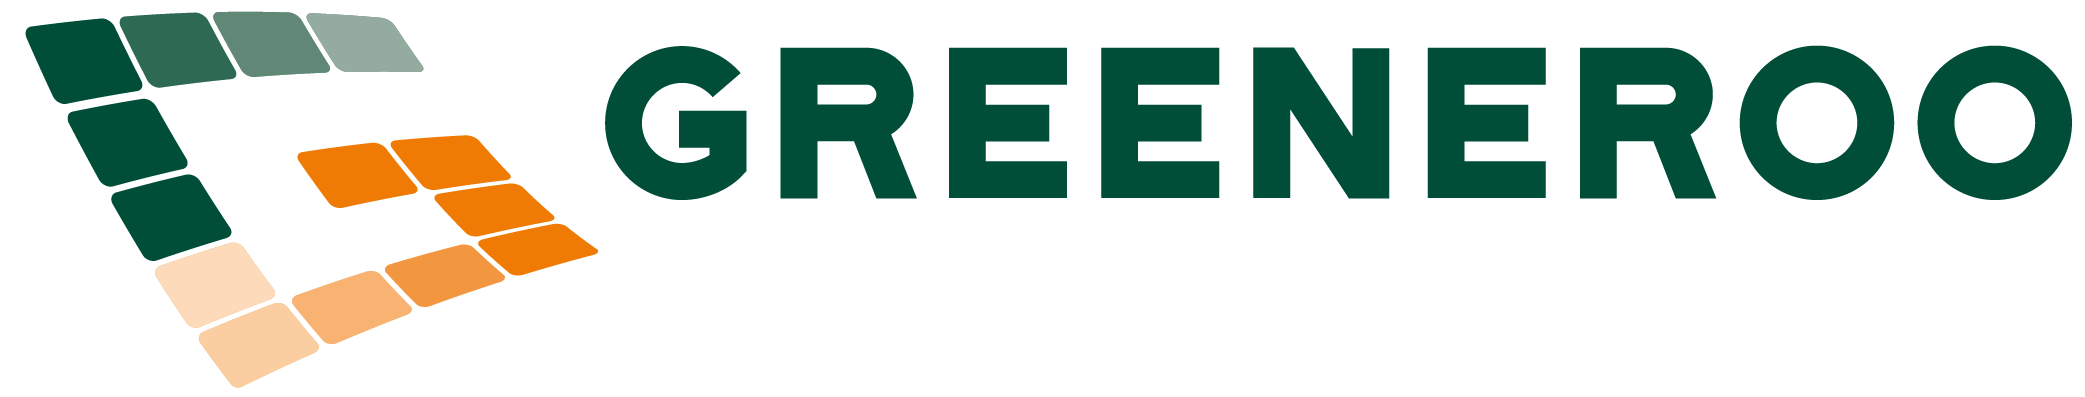 Greeneroo B.V. logo